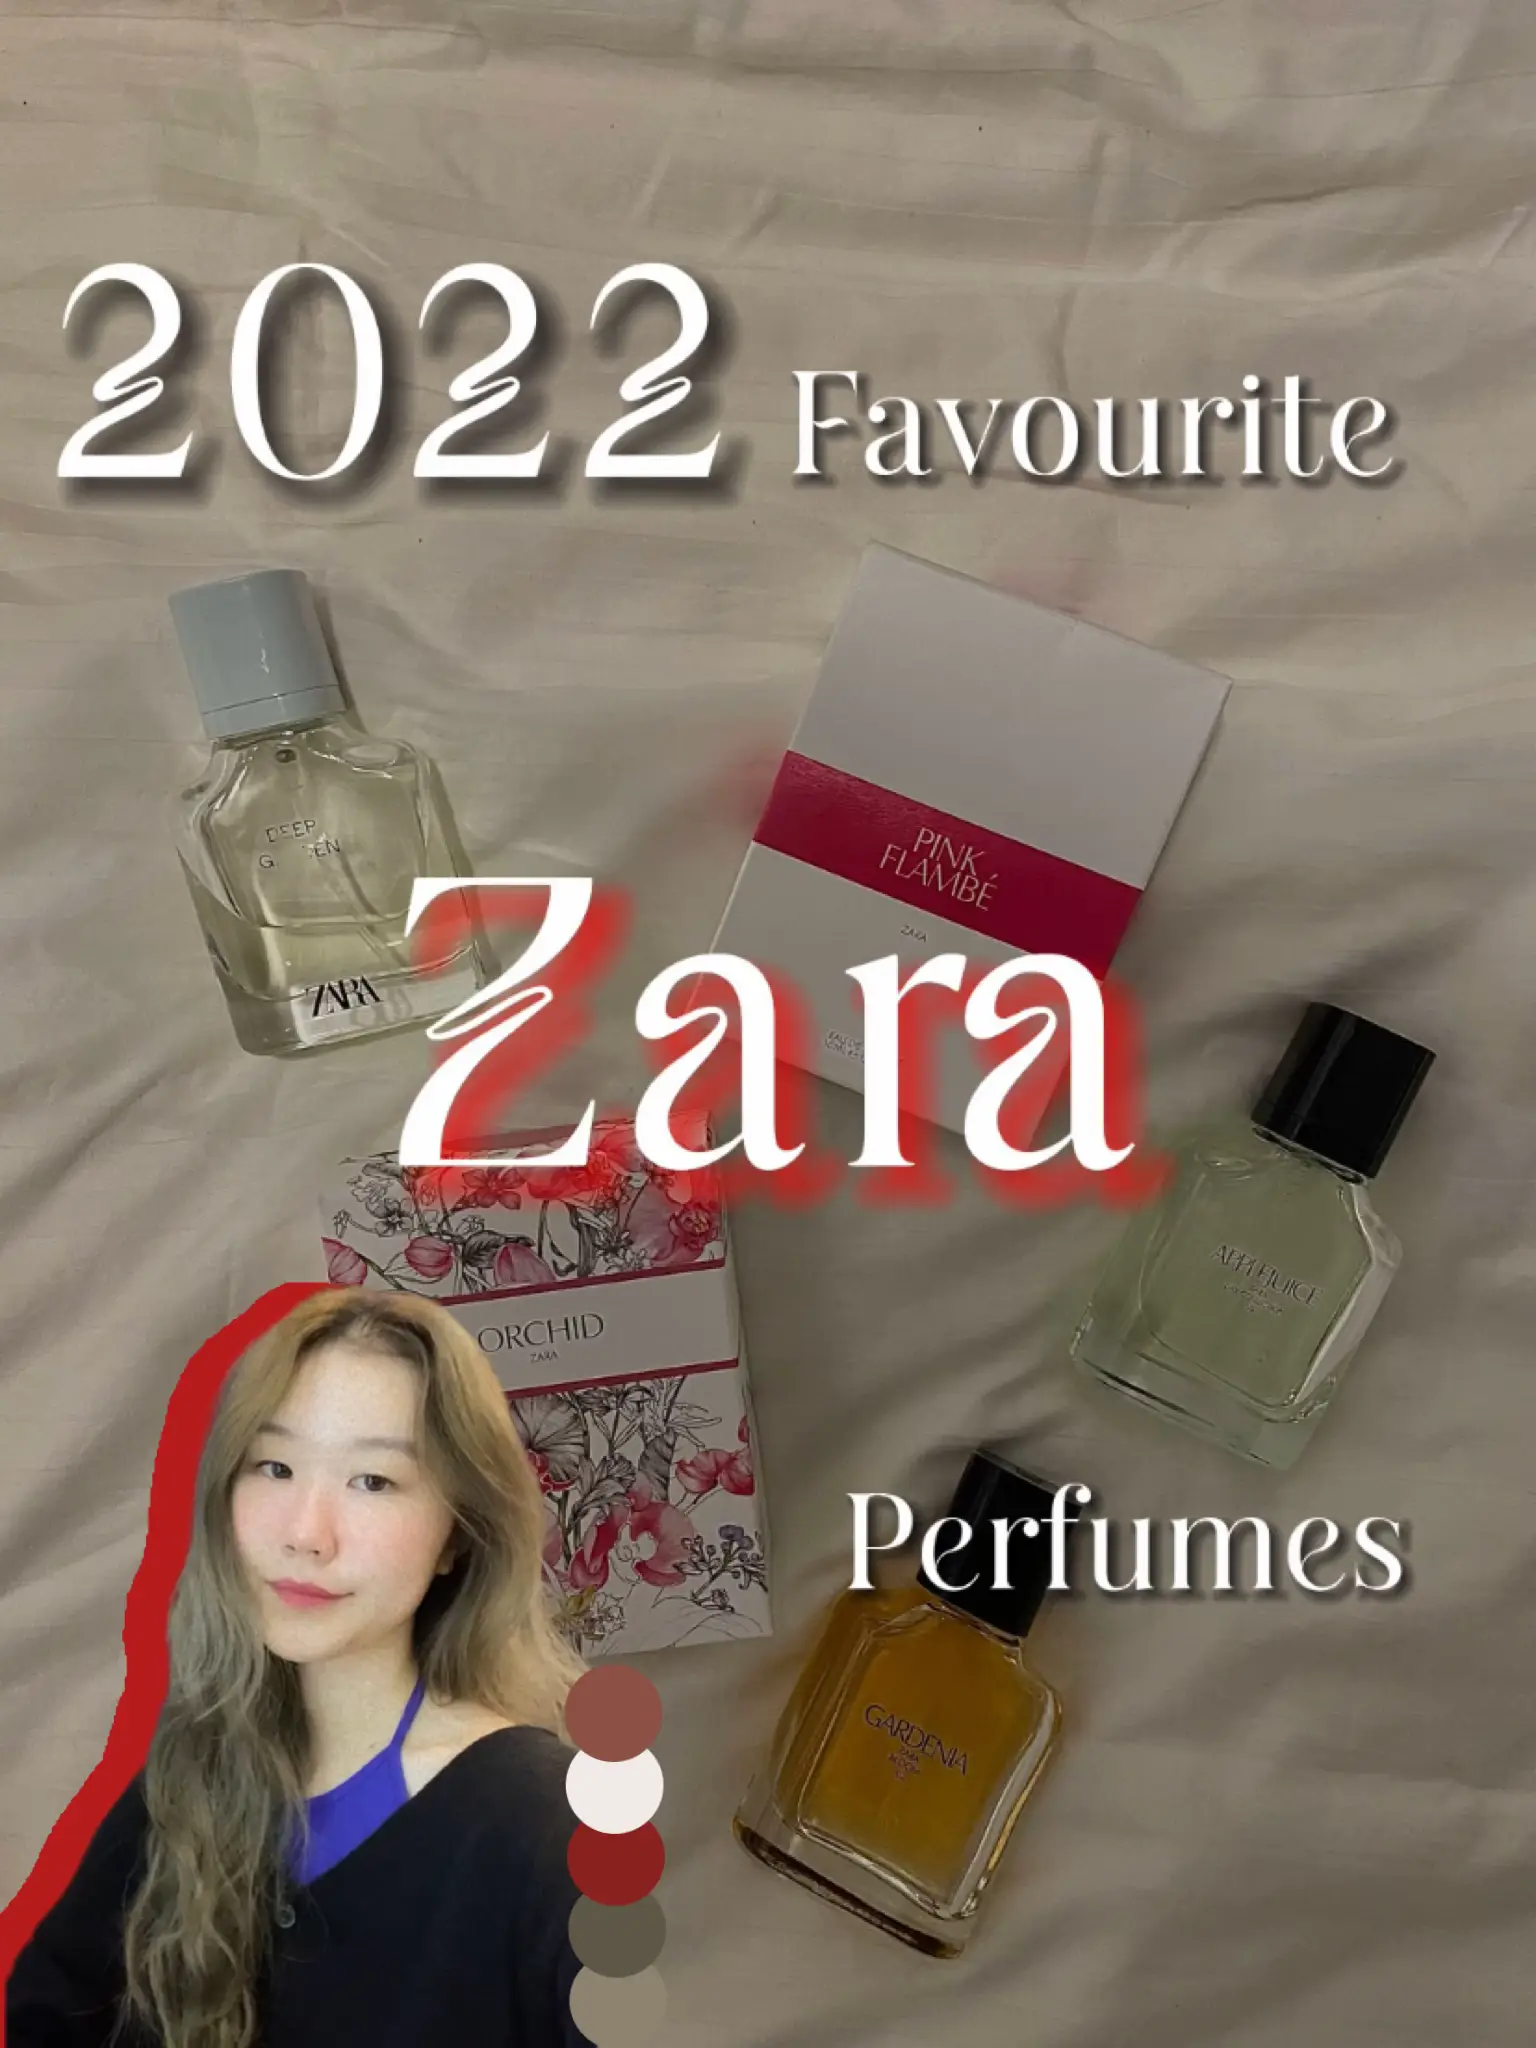 Hipster Oud Zara perfume - a new fragrance for women 2022